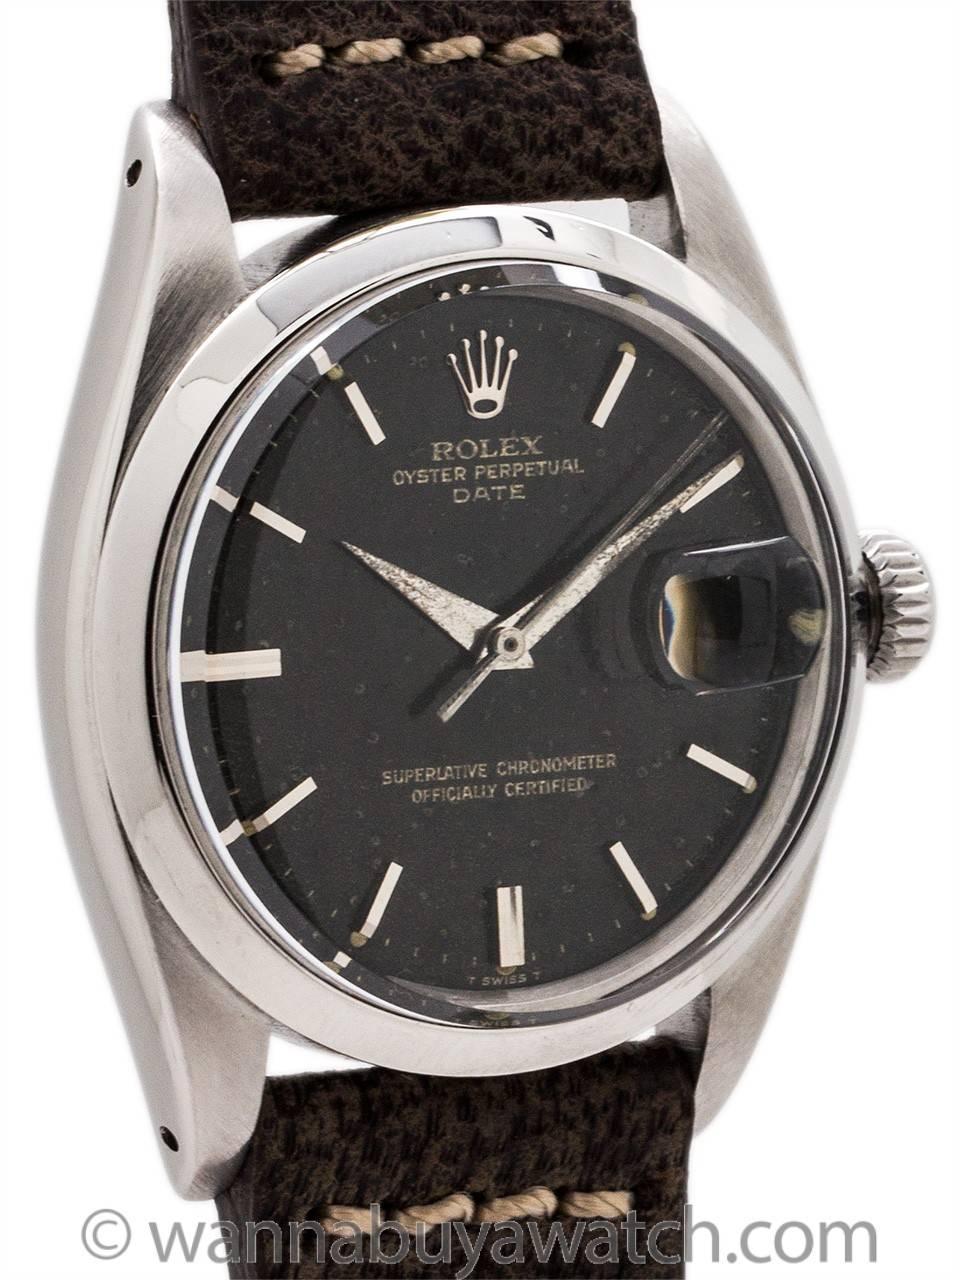 Modern Rolex Oyster Perpetual Date ref 1500 Black Gilt Dial circa 1964 